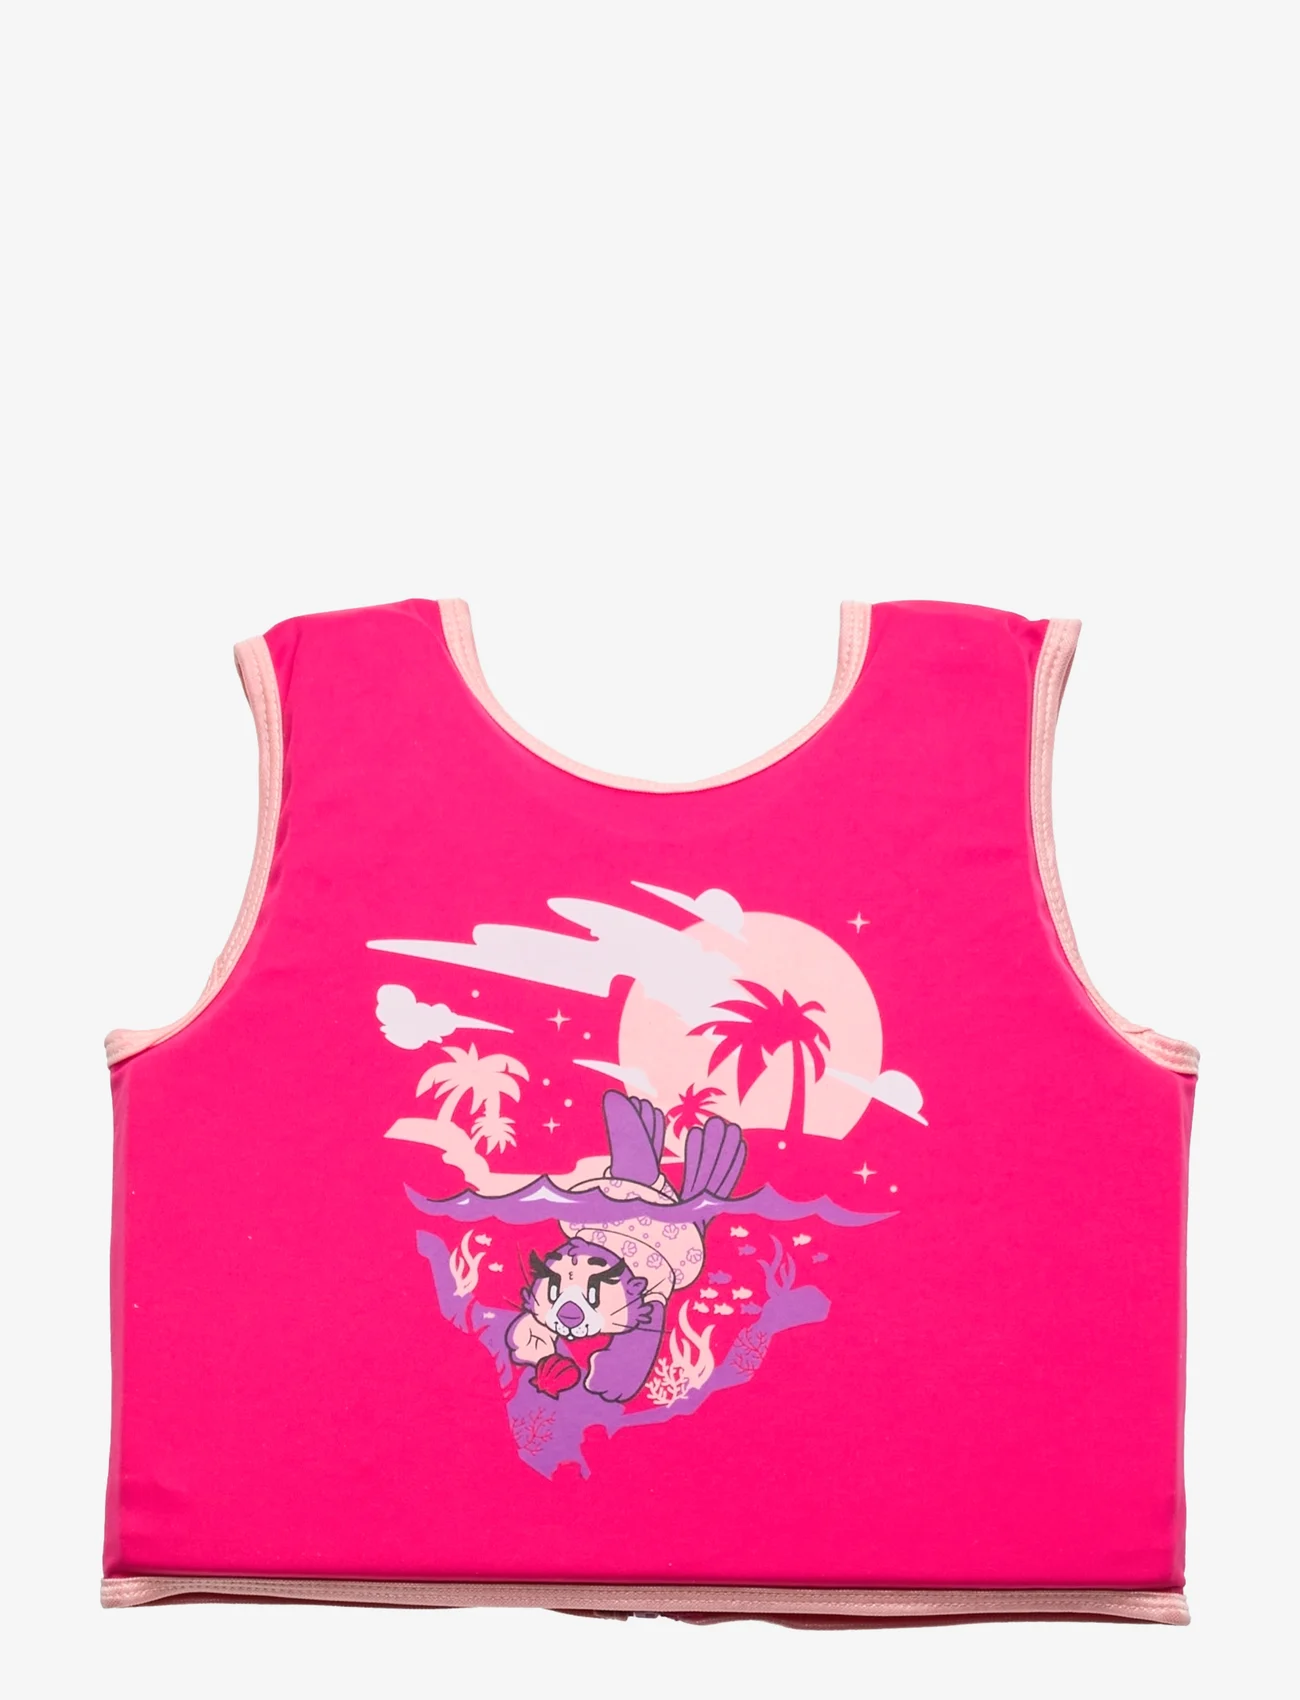 Speedo - Character Printed Float Vest - plaukimo reikmenys - pink/purple - 1